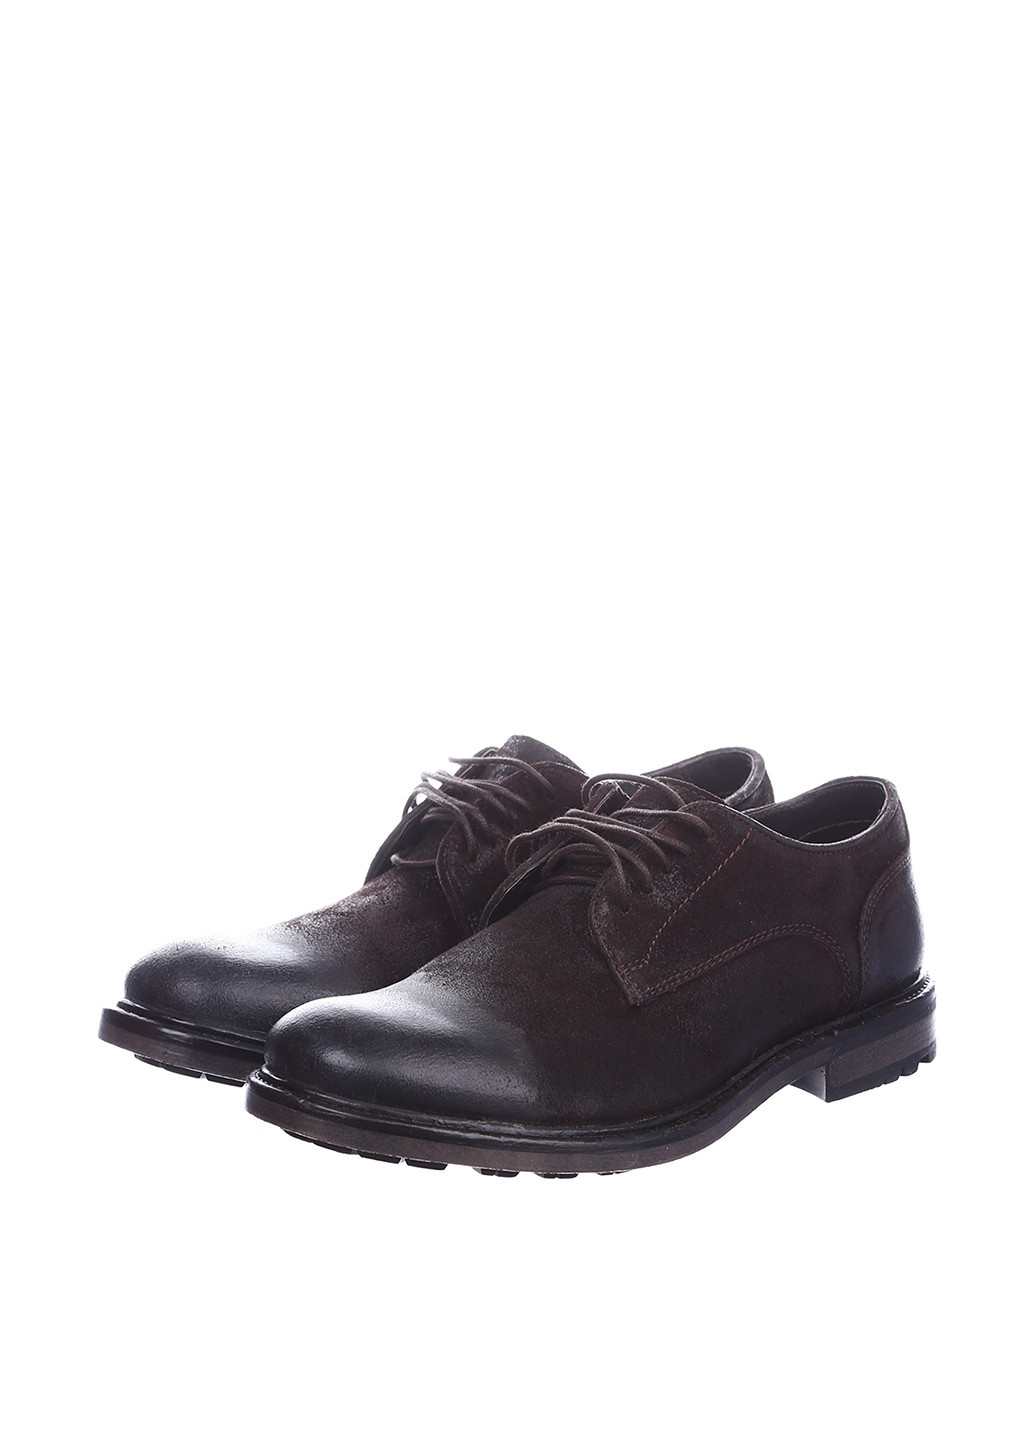 Темно-коричневые кэжуал туфли Base London на шнурках